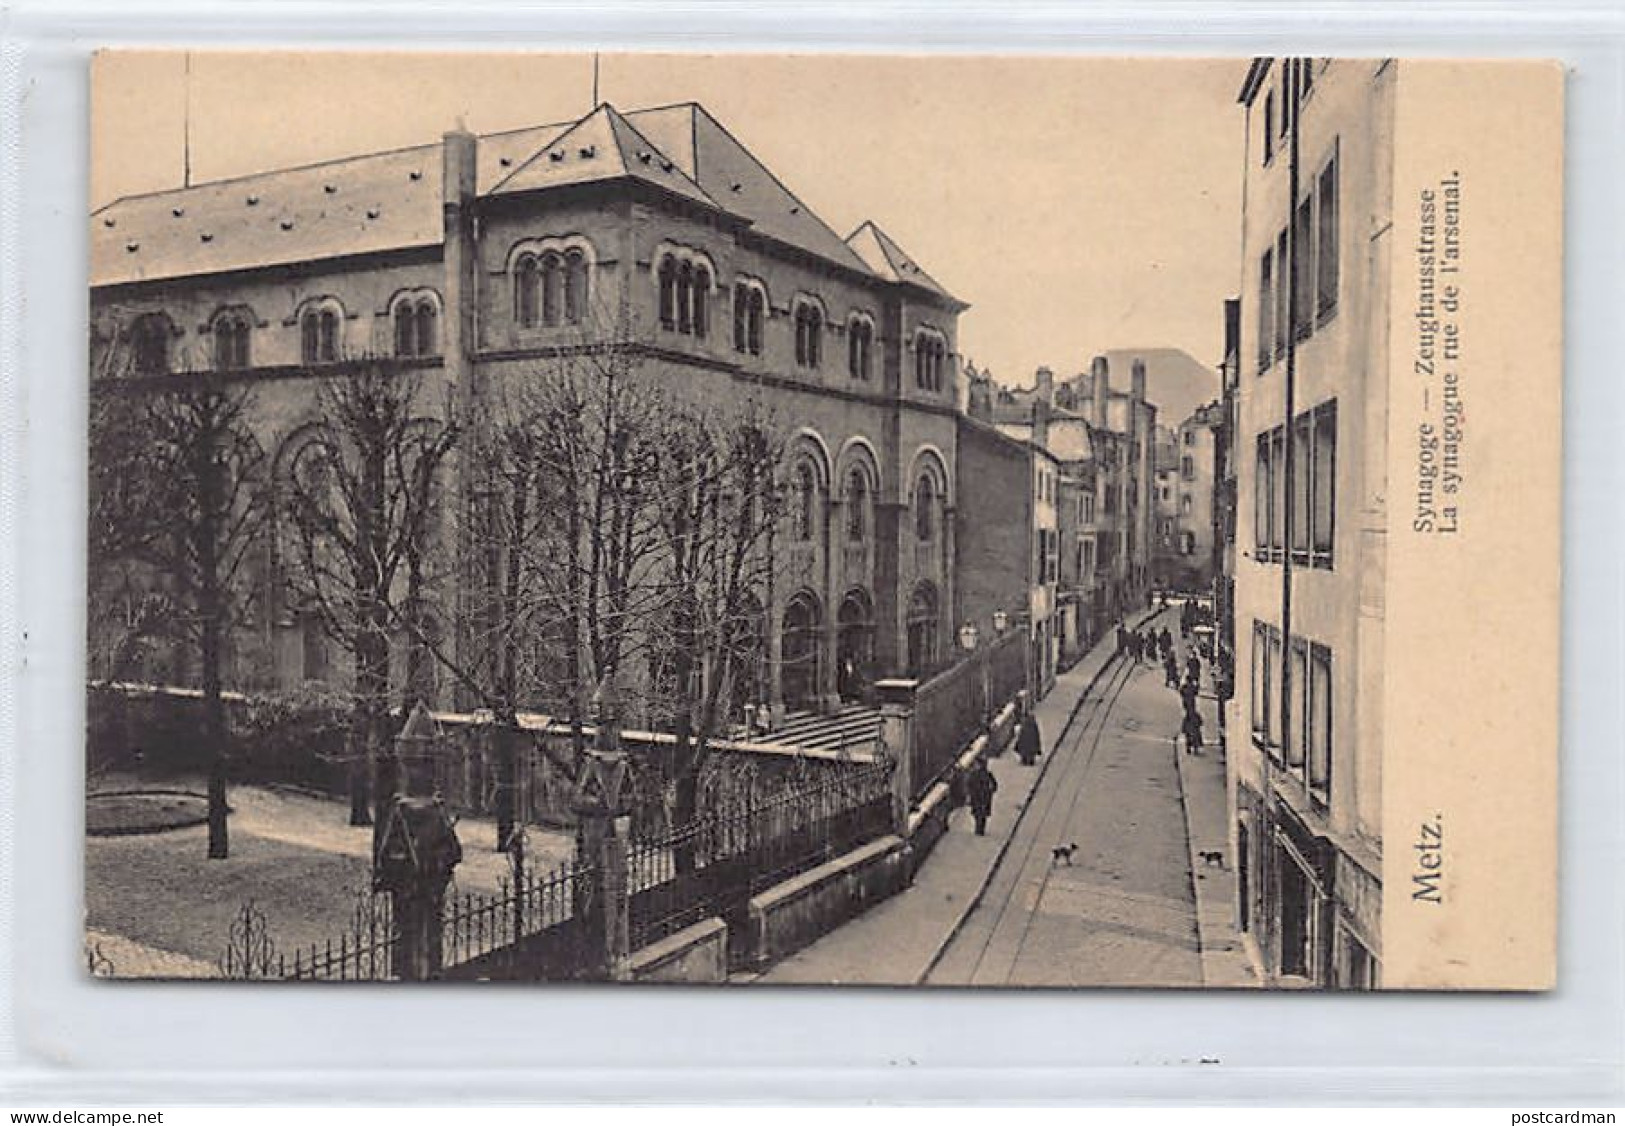 JUDAICA - France - METZ - La Synagogue, Rue De L'Arsenal - Ed. Nels Série 104 N. 275 - Judaisme